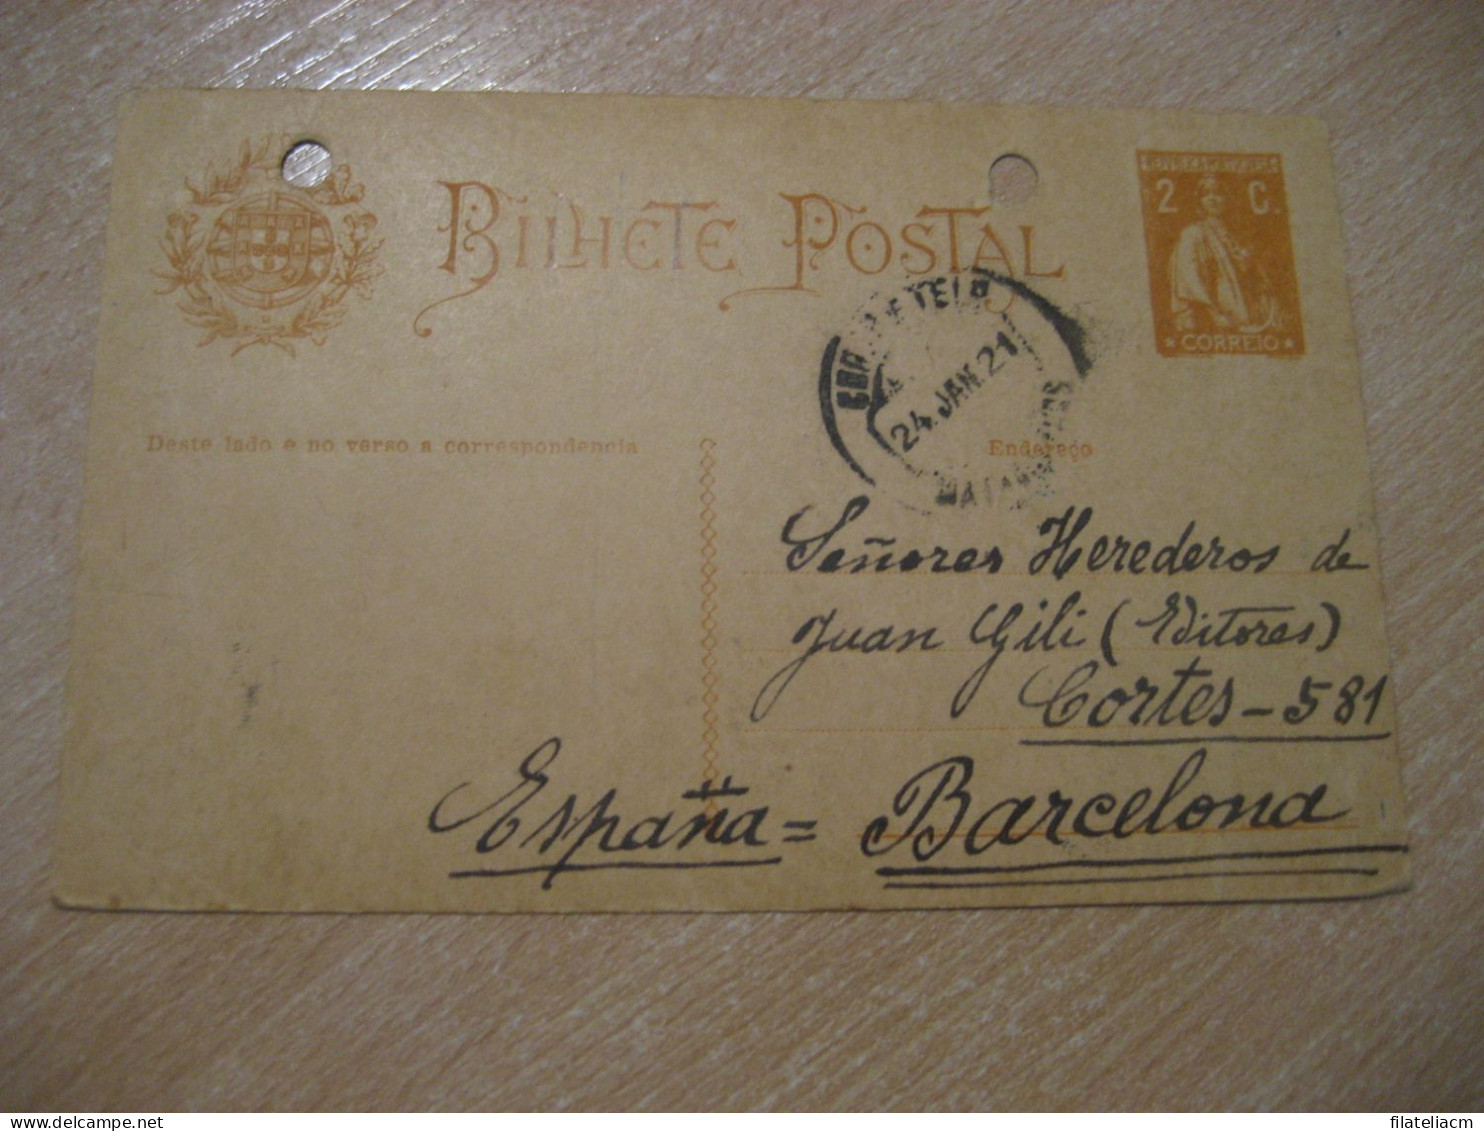 MATOSINHOS 1921 To Barcelona Spain Cancel Bilhete Postal Stationery Card PORTUGAL - Covers & Documents